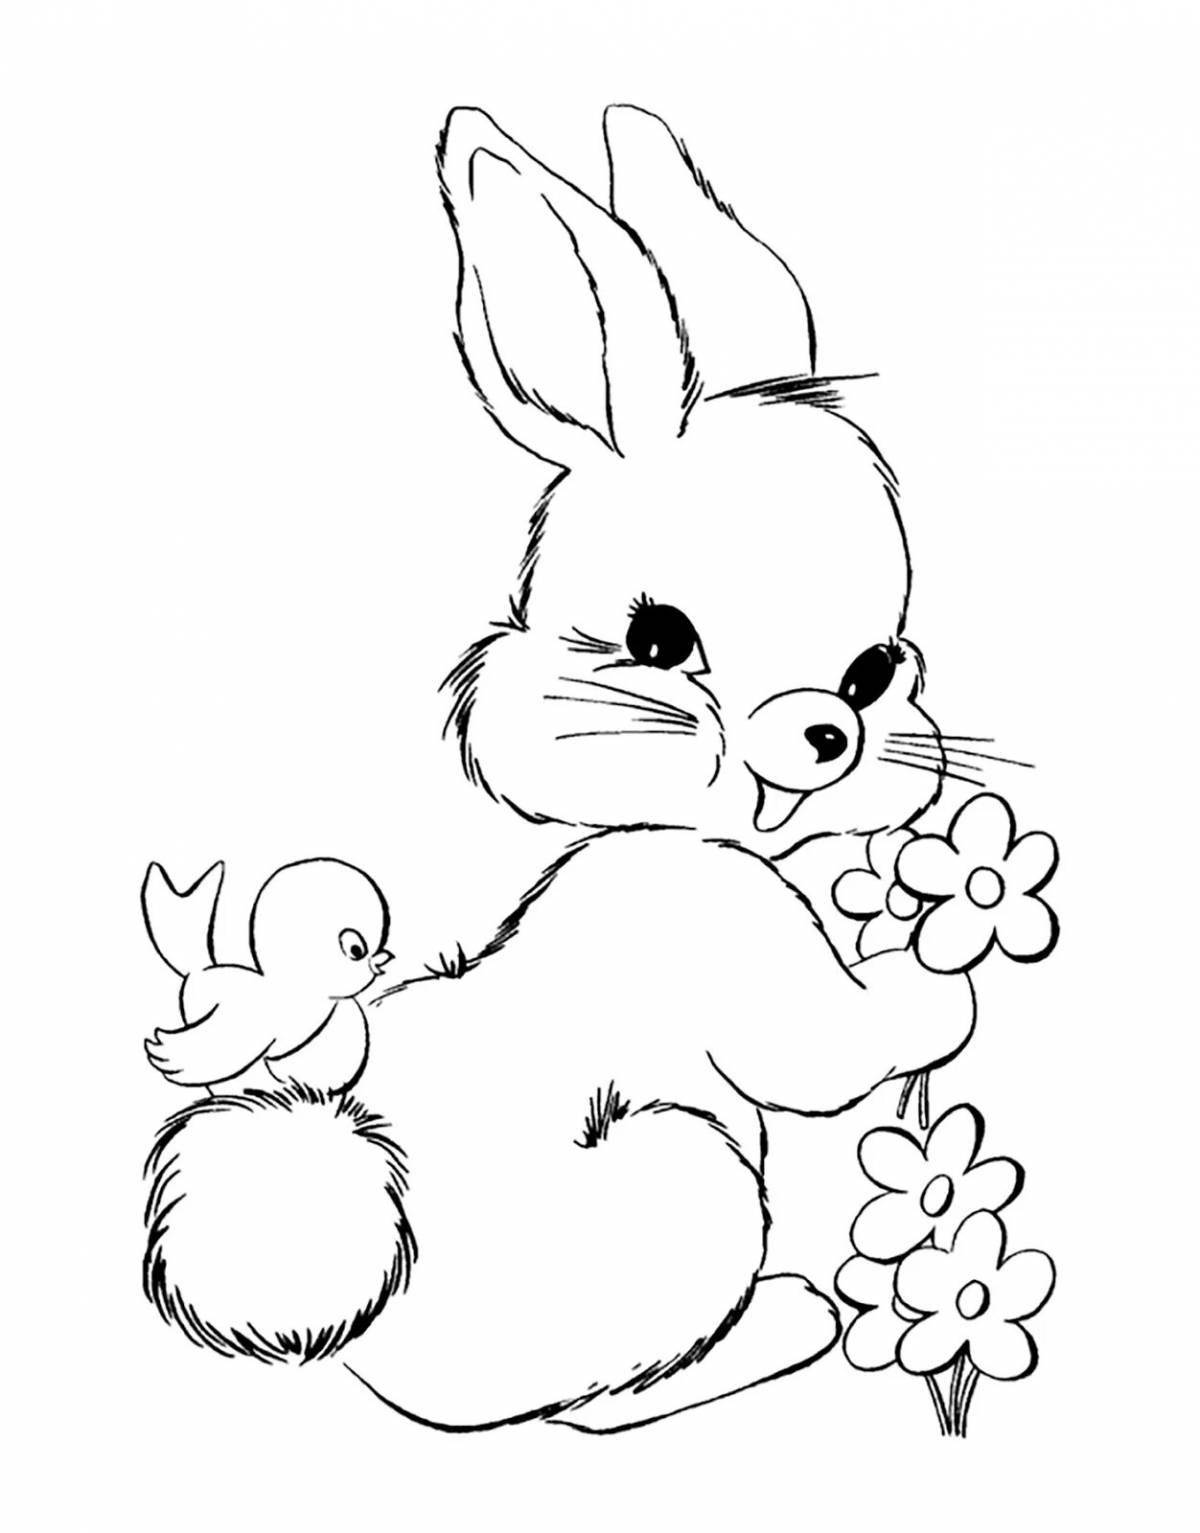 Hare baby #2